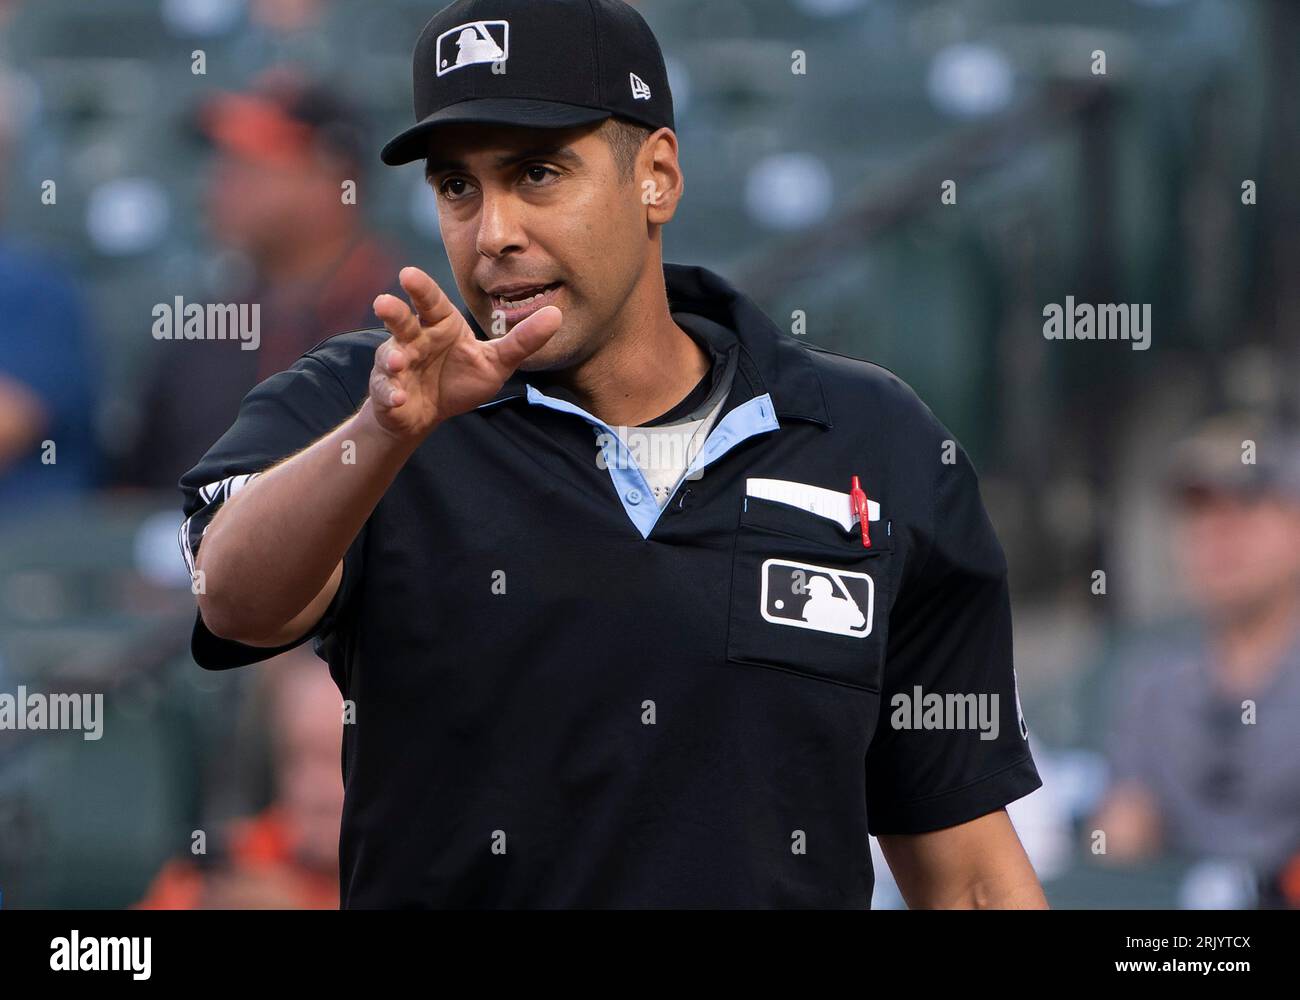 MLB home playe umpire DJ Reyburn before the syart of a game Stock Photo